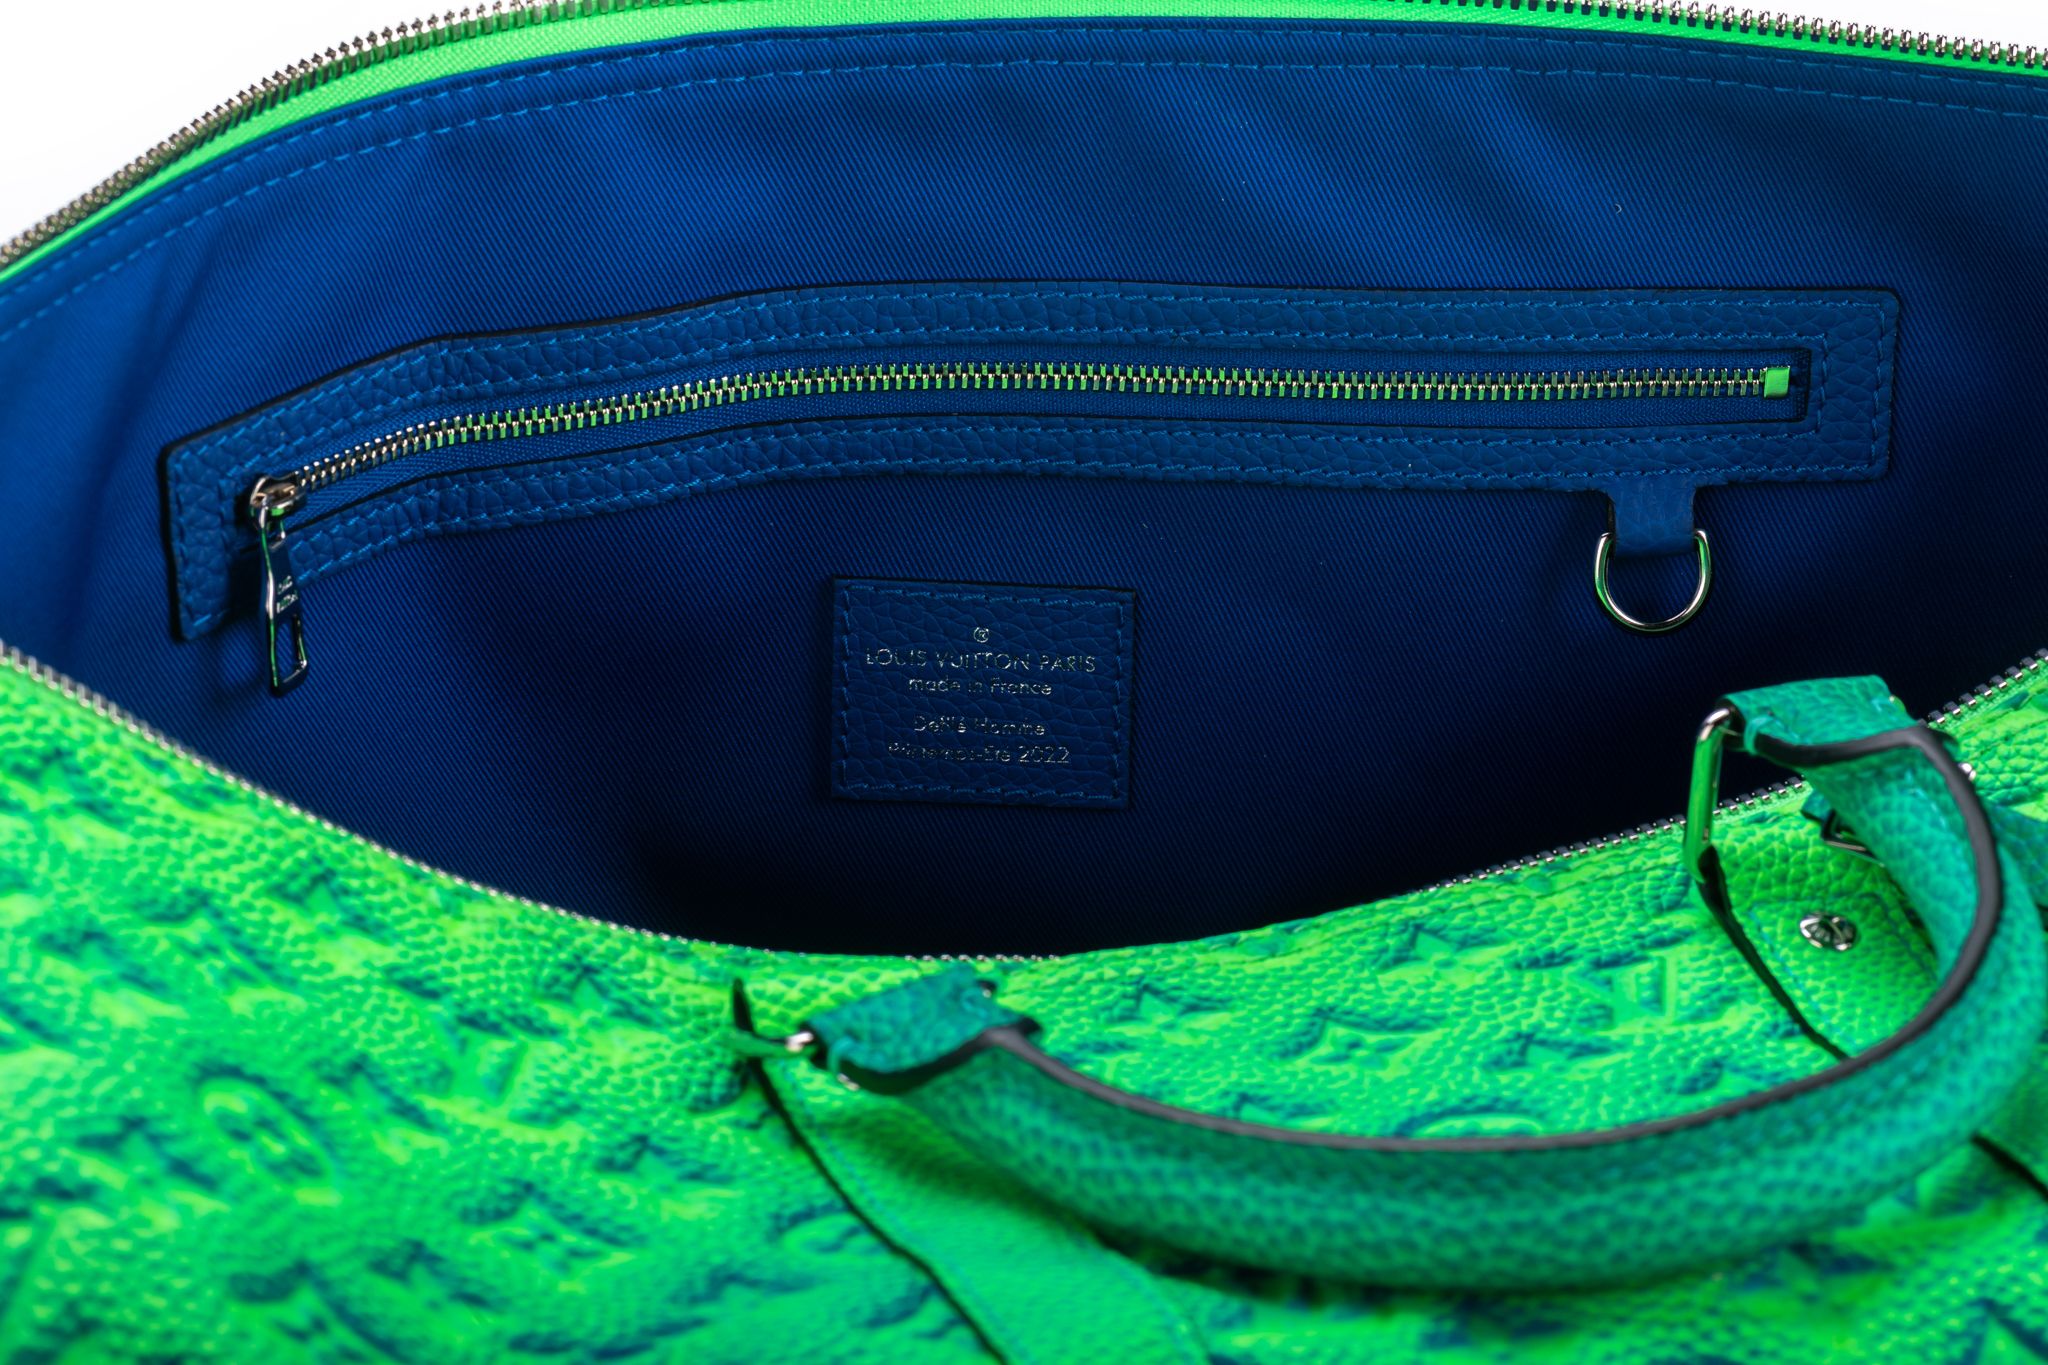 greenscreen Louis Vuitton Airplane Bag by Virgil Abloh #virgil